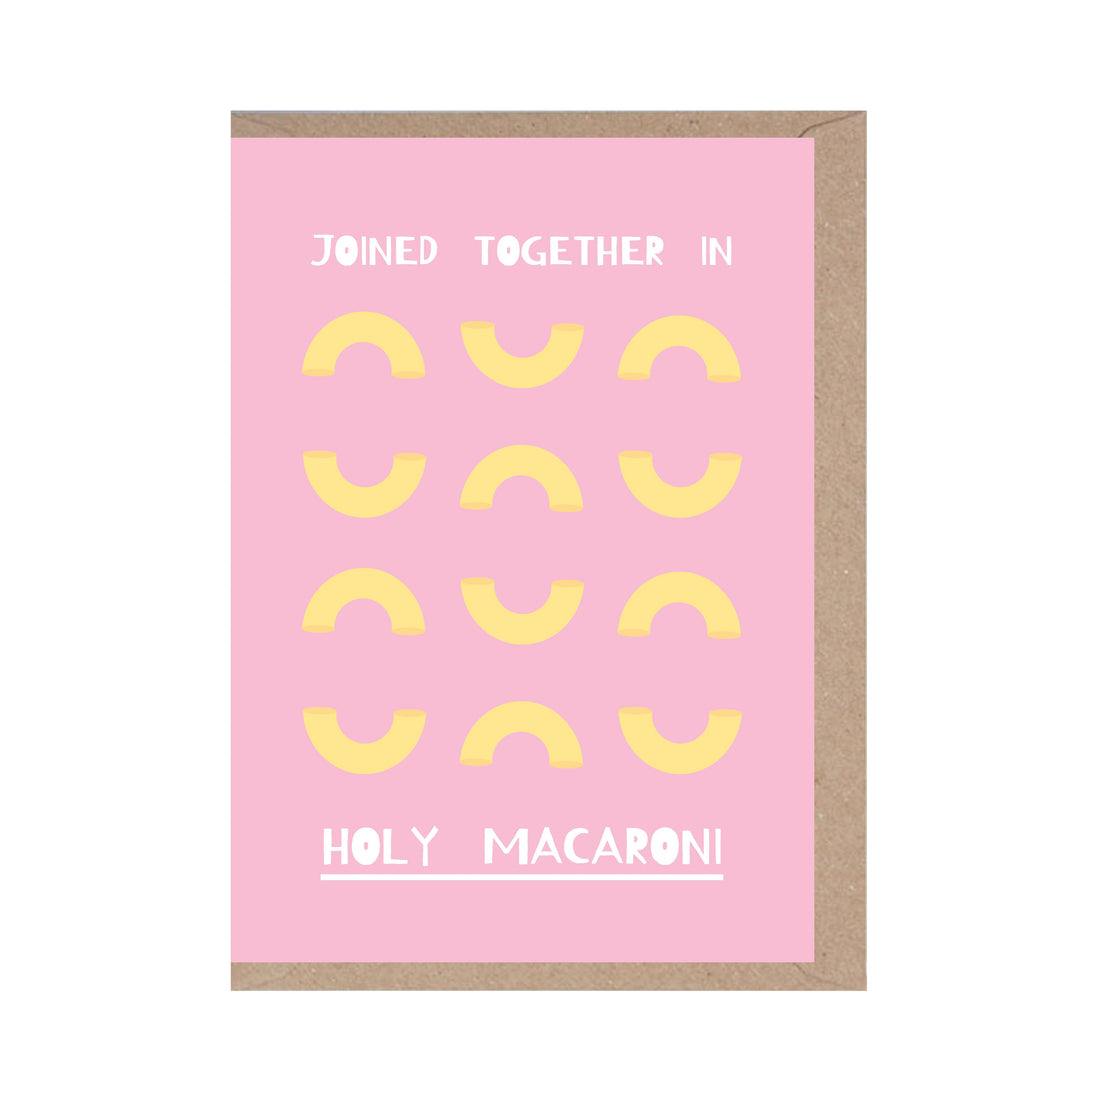 Holy Macaroni